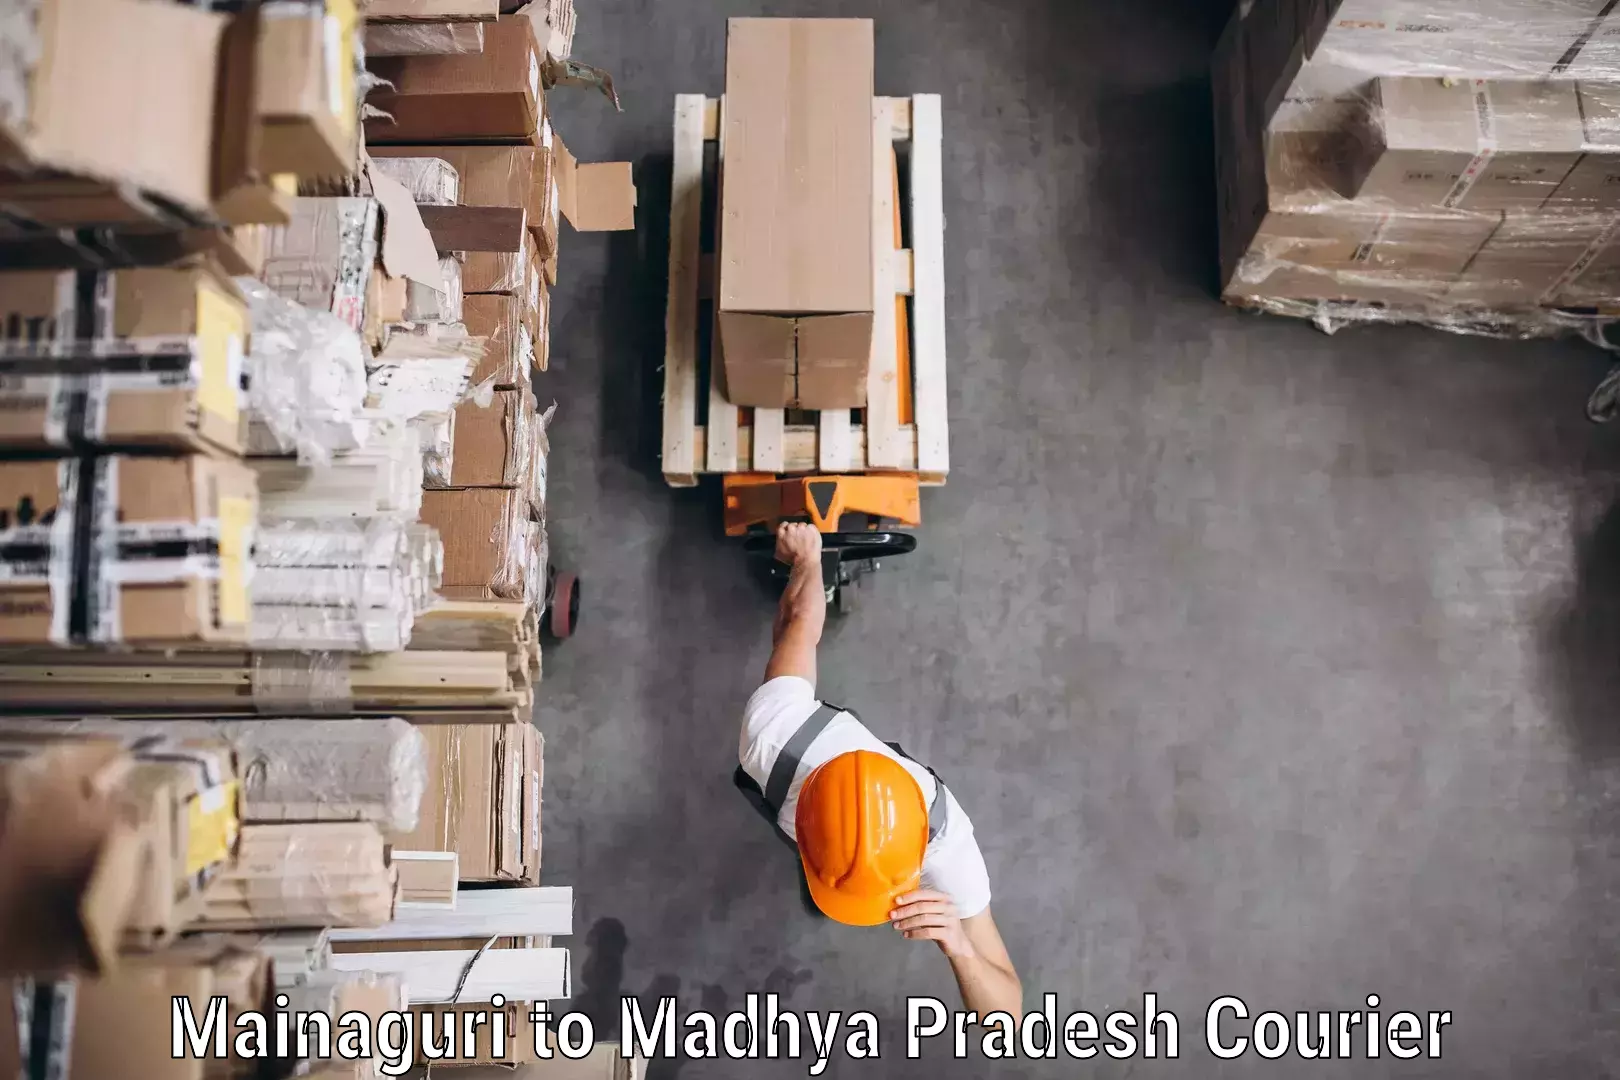 Express delivery capabilities Mainaguri to Madhya Pradesh